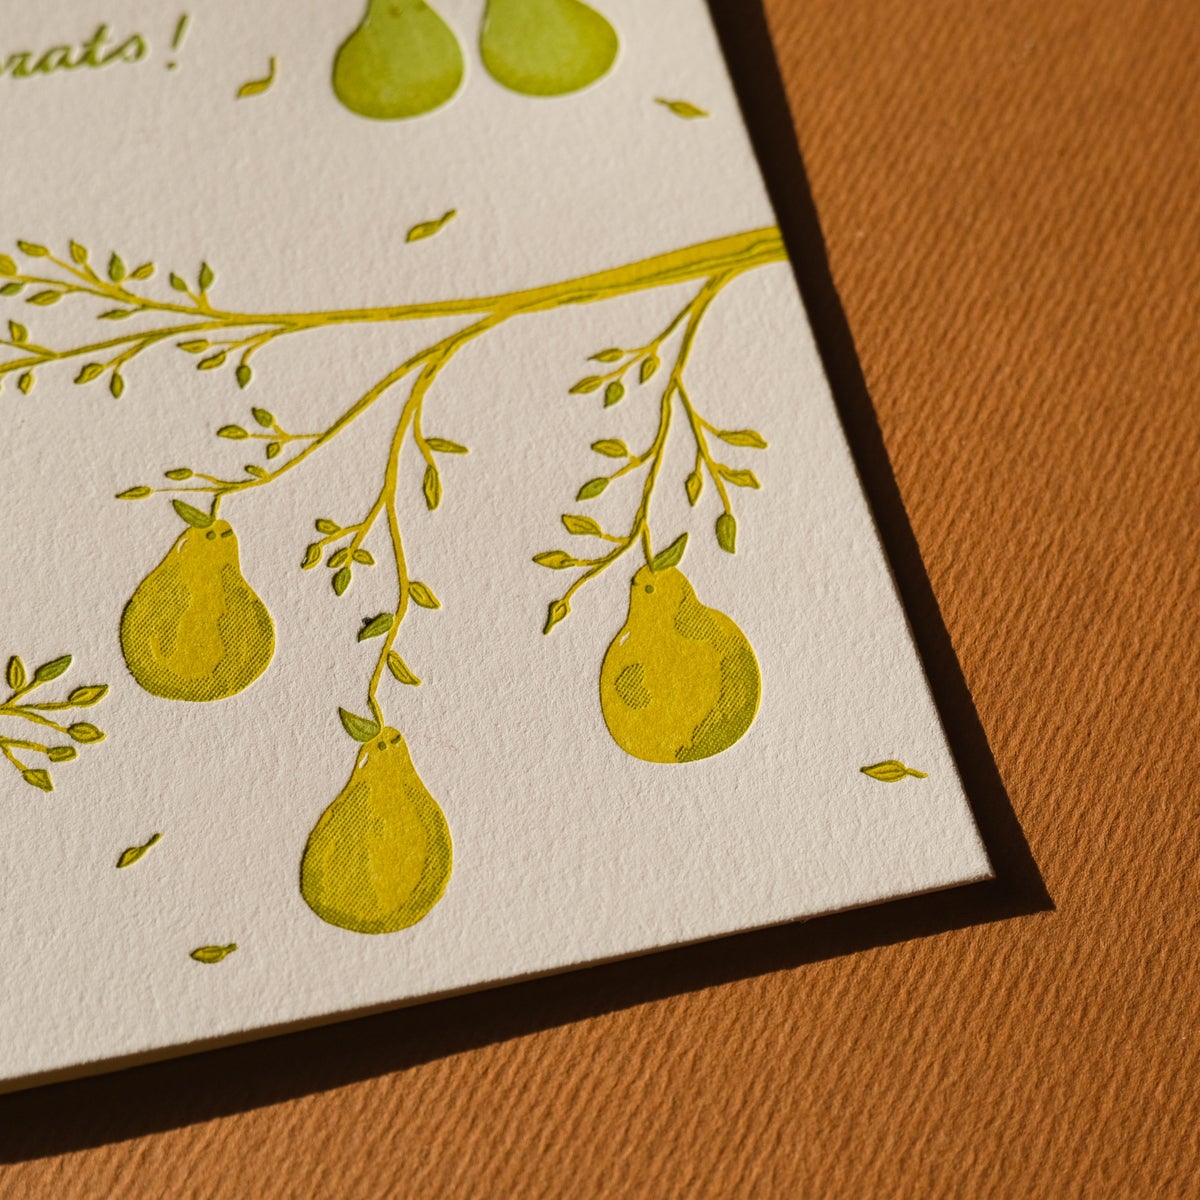 Greeting Card | Congrats Pears